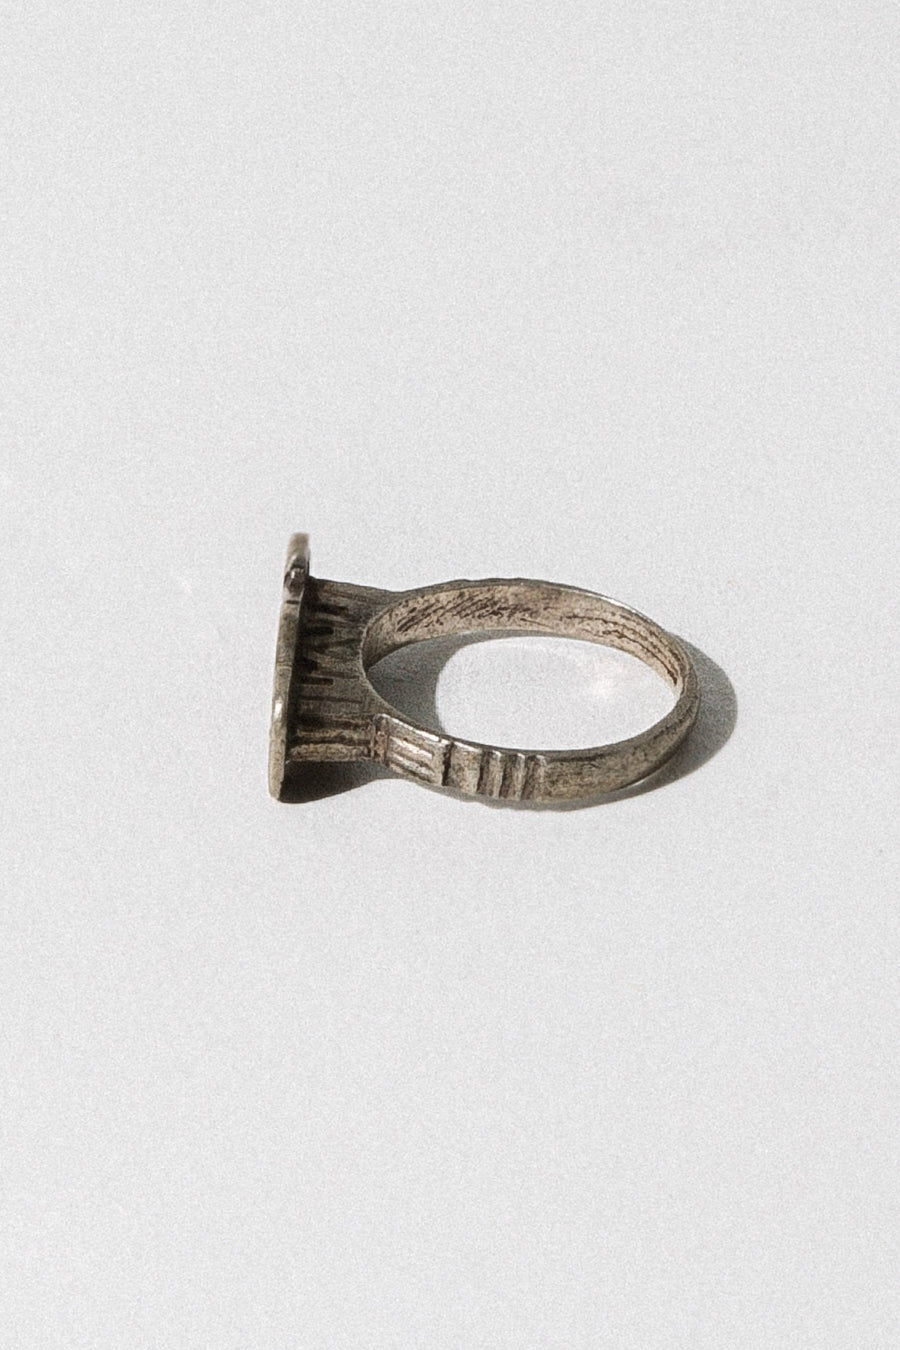 Ethnic Embellishments Jewelry Silver / US 6.5 Copy of Copy of Copy of Copy of Moroccan Ring